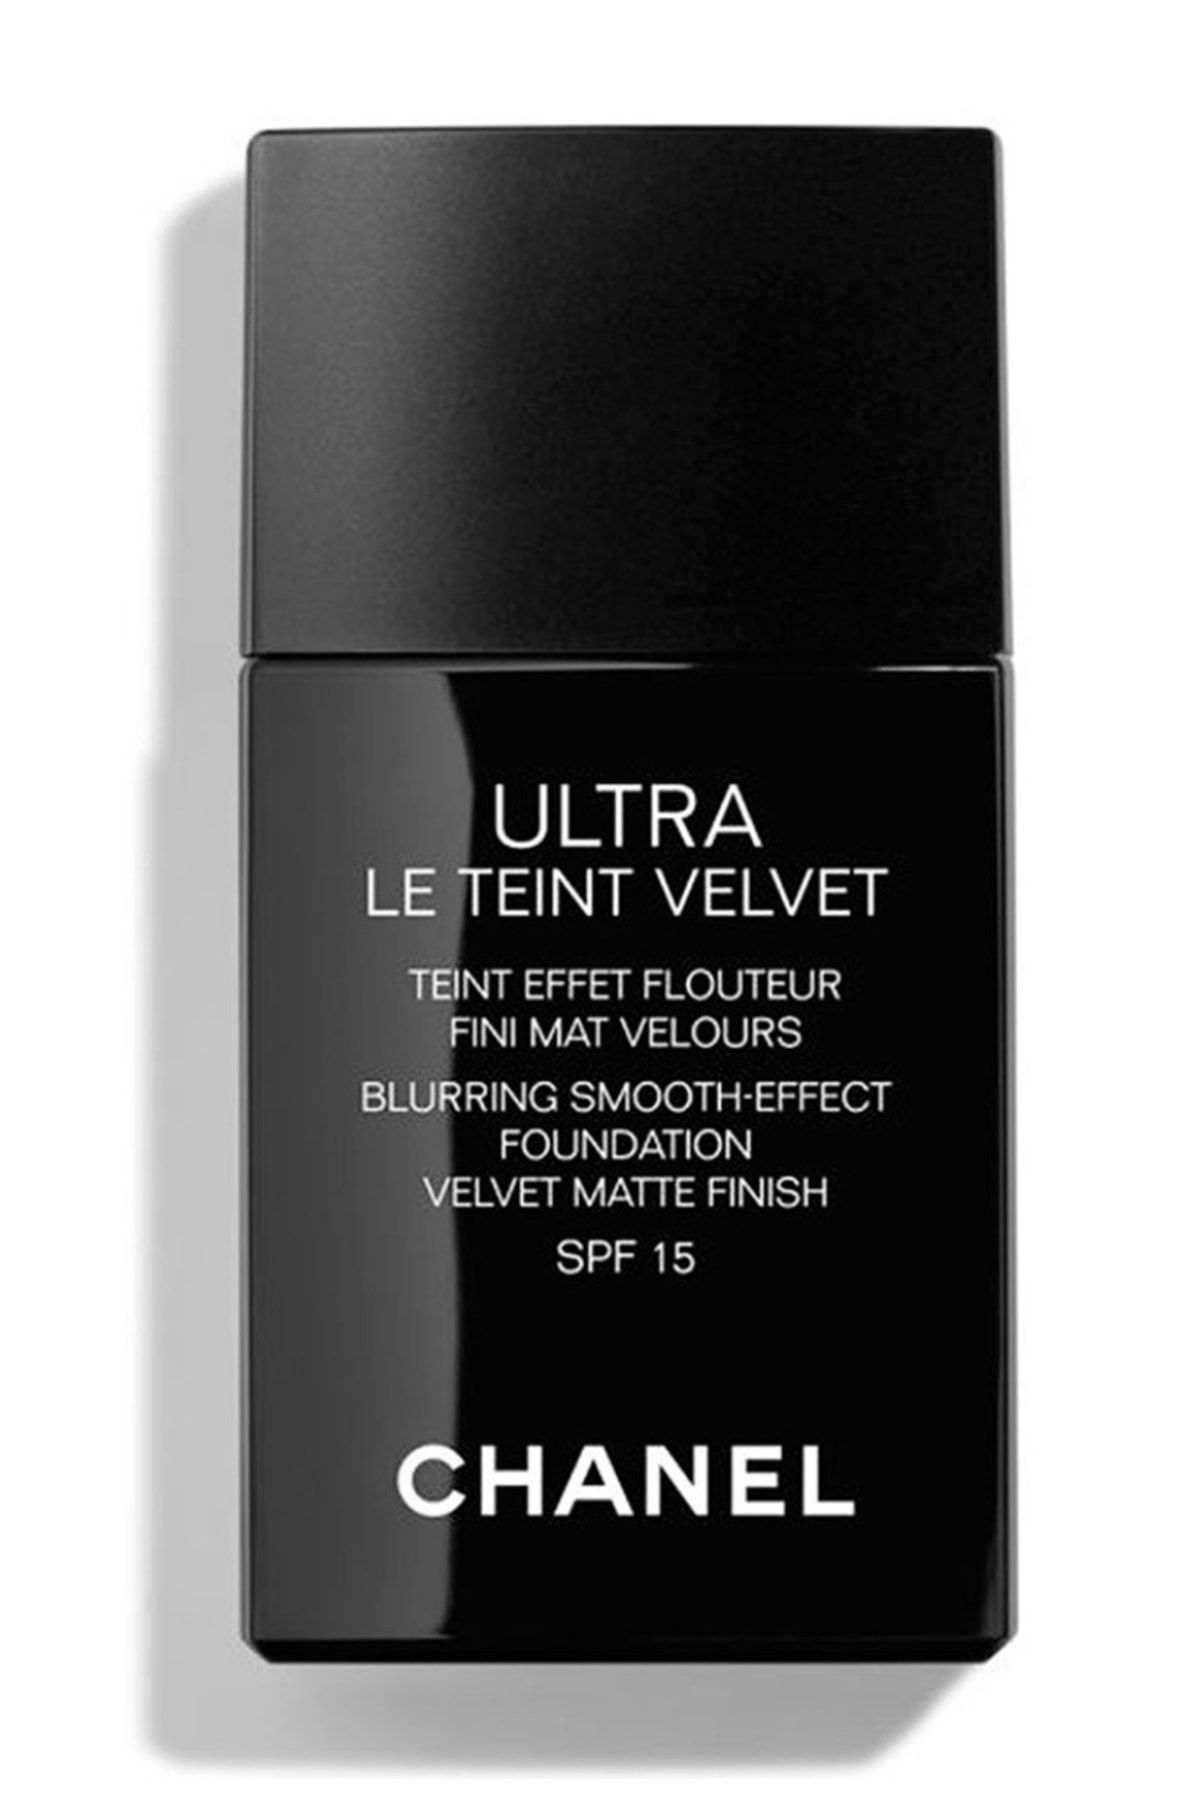 Chanel Ultra Le Teint Velvet Blurring - Smooth Effect Foundation